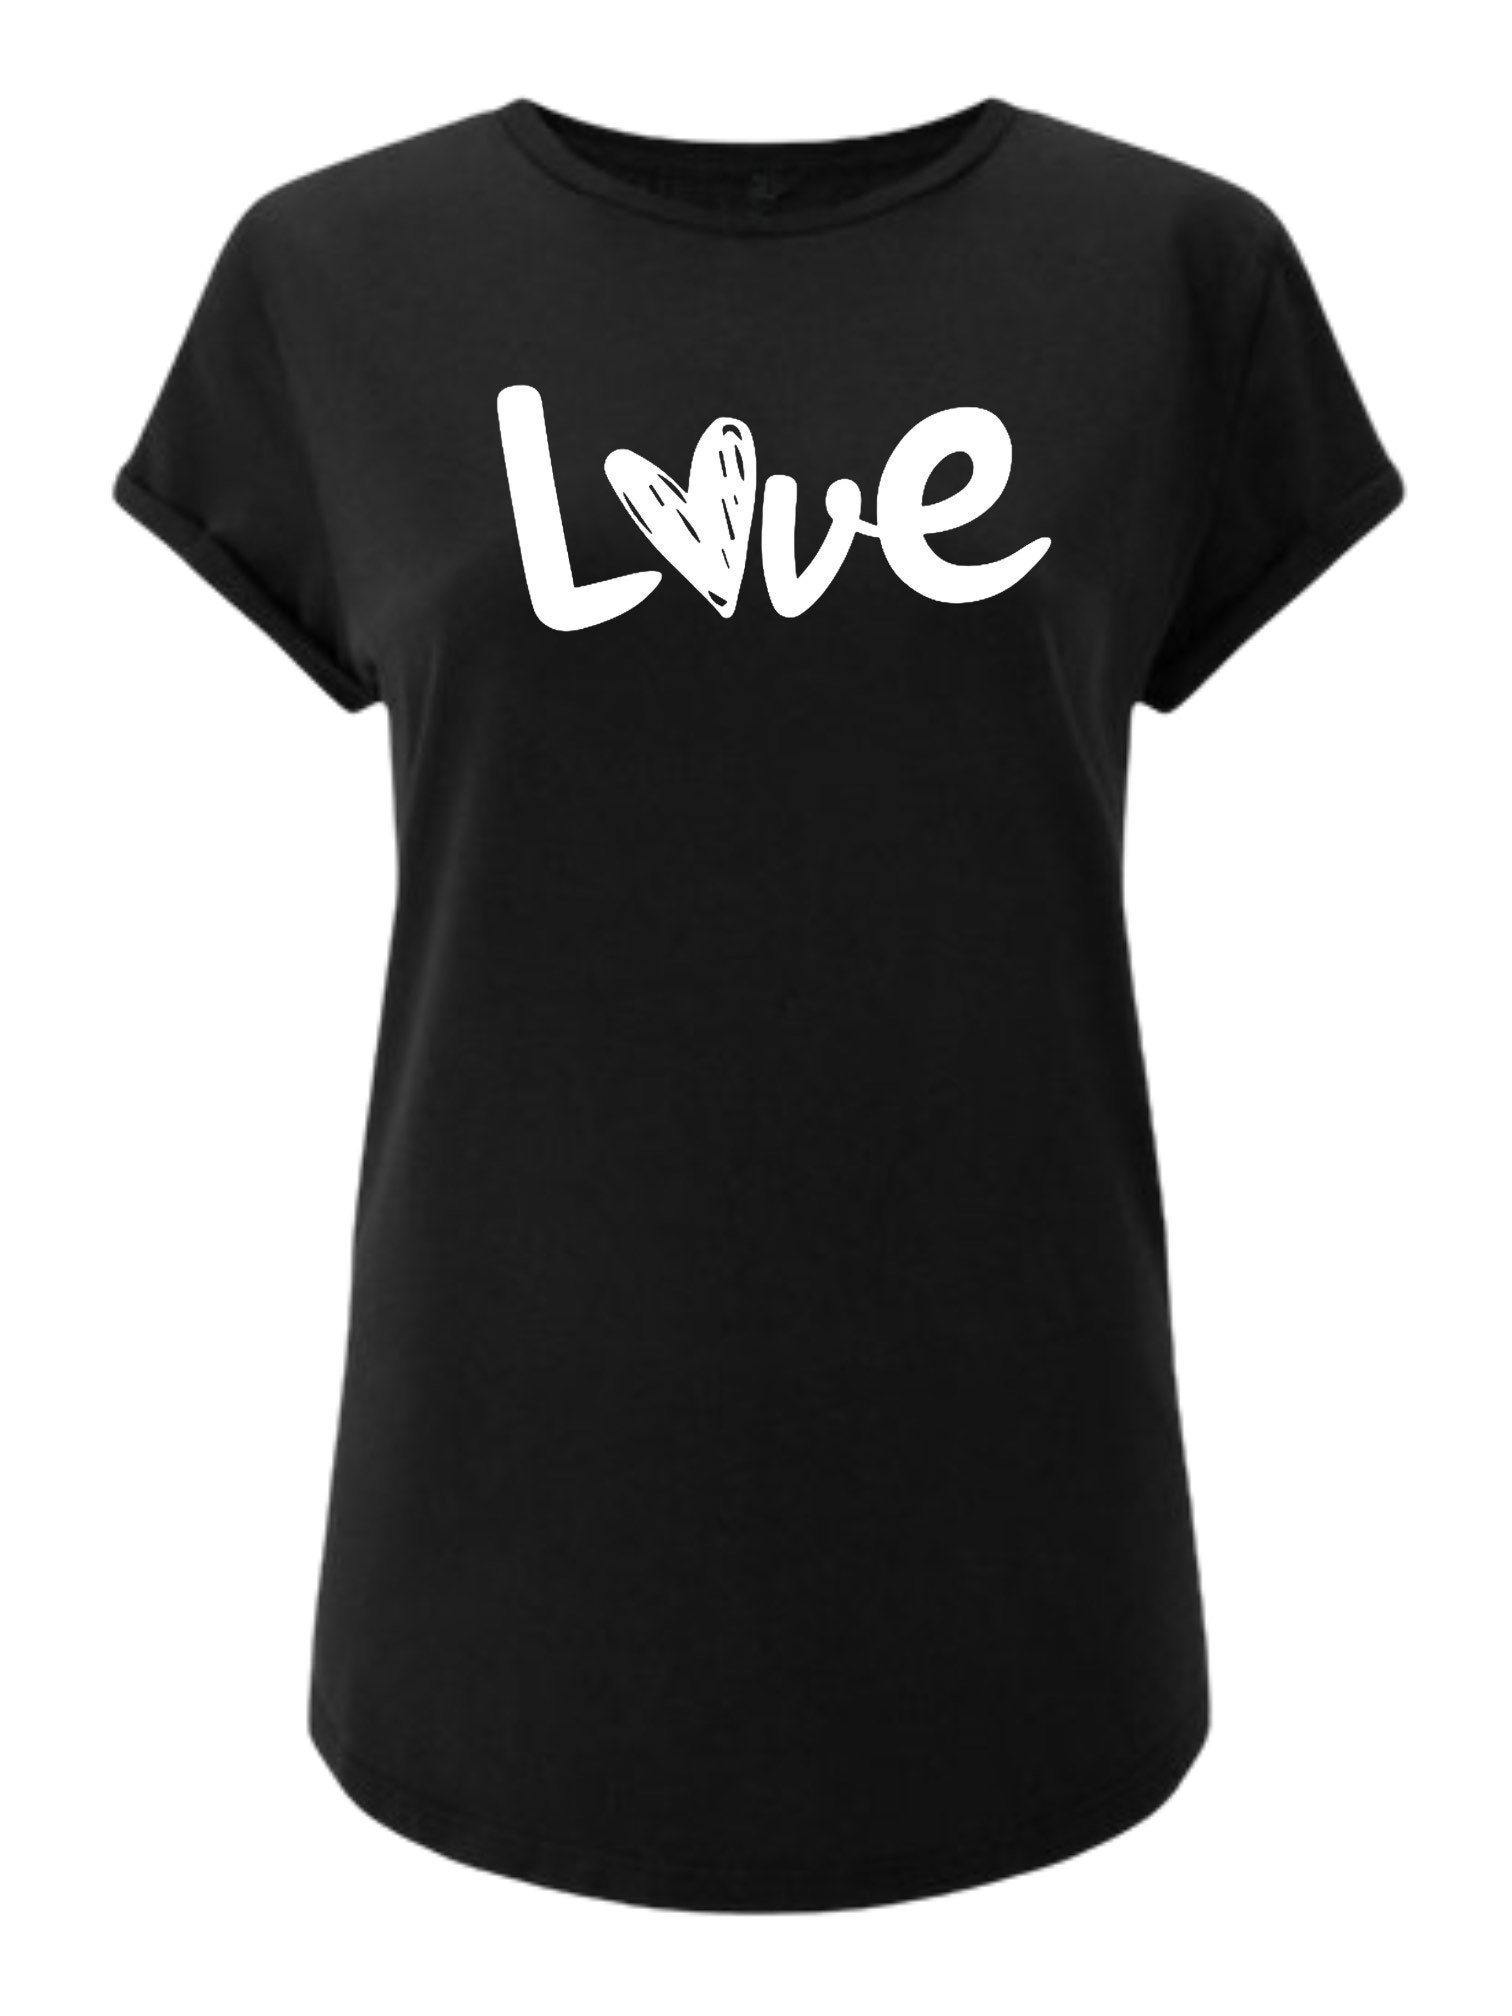 HEART PRINTED SHIRT Black love Tee Shirt Women Graphic | Etsy